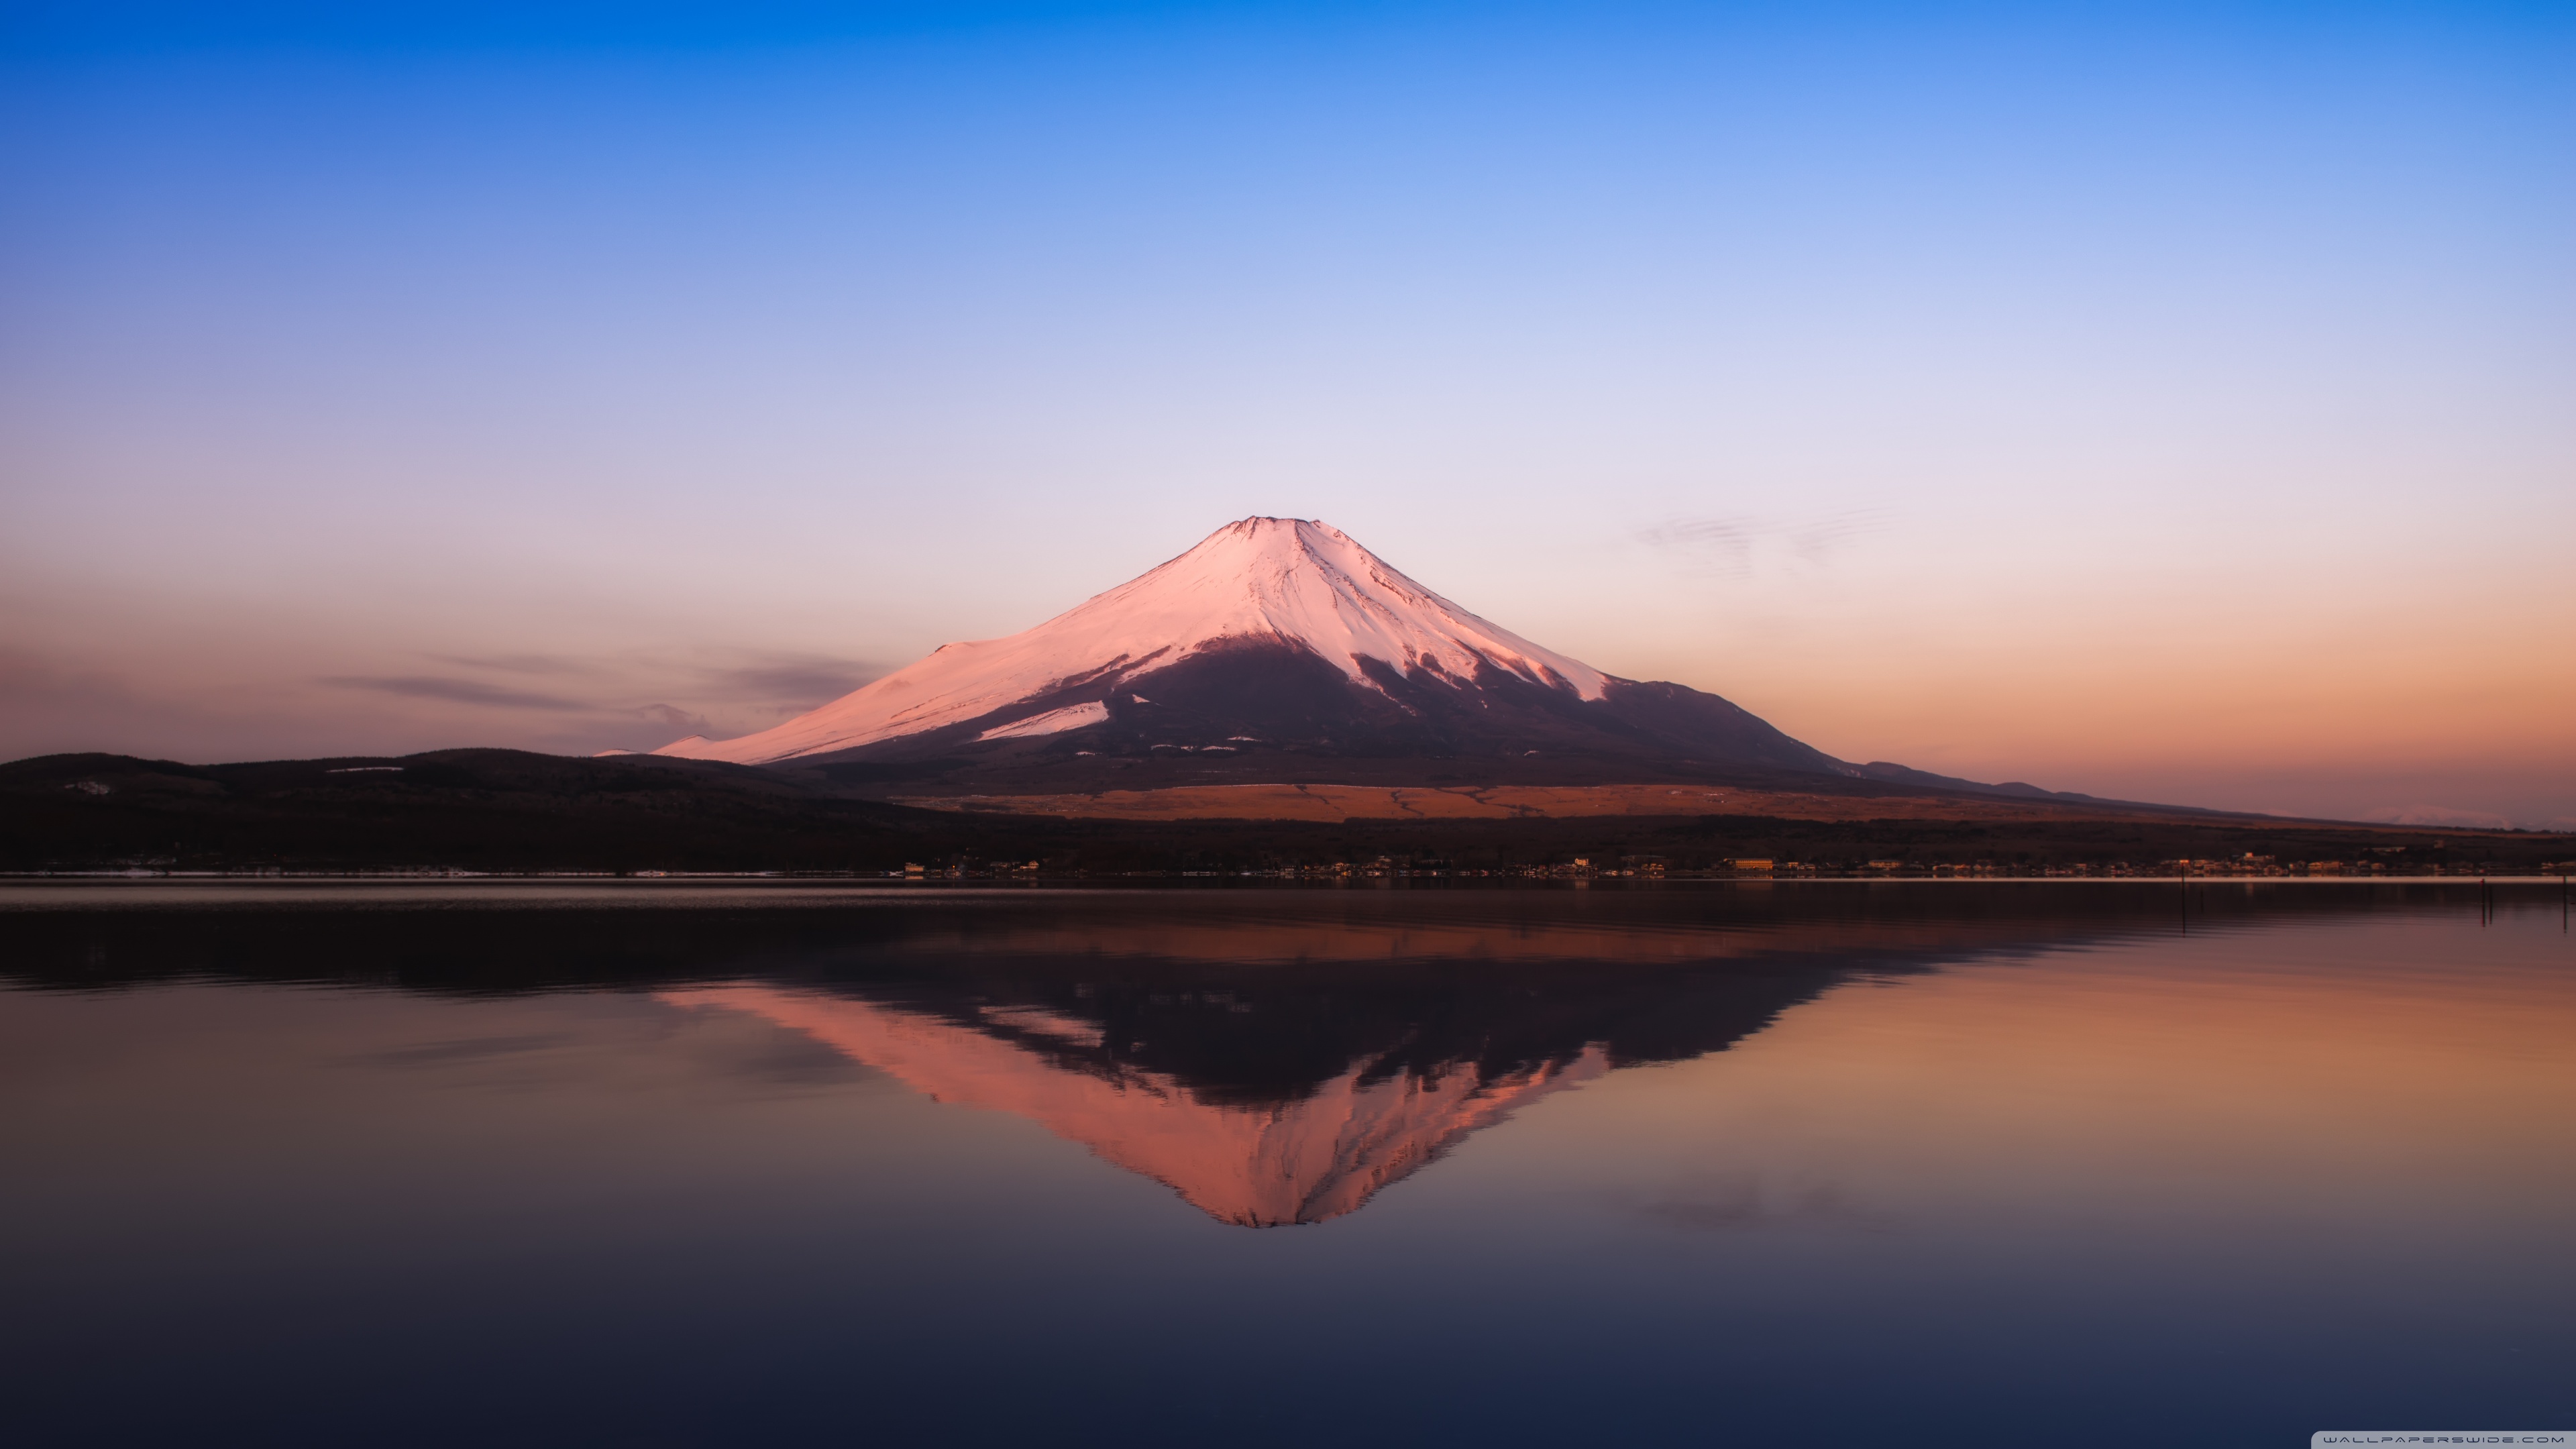 Mount Fuji Landscapes Ultra Hd Desktop Background Wallpaper For 4k Uhd Tv Widescreen Ultrawide Desktop Laptop Multi Display Dual Monitor Tablet Smartphone